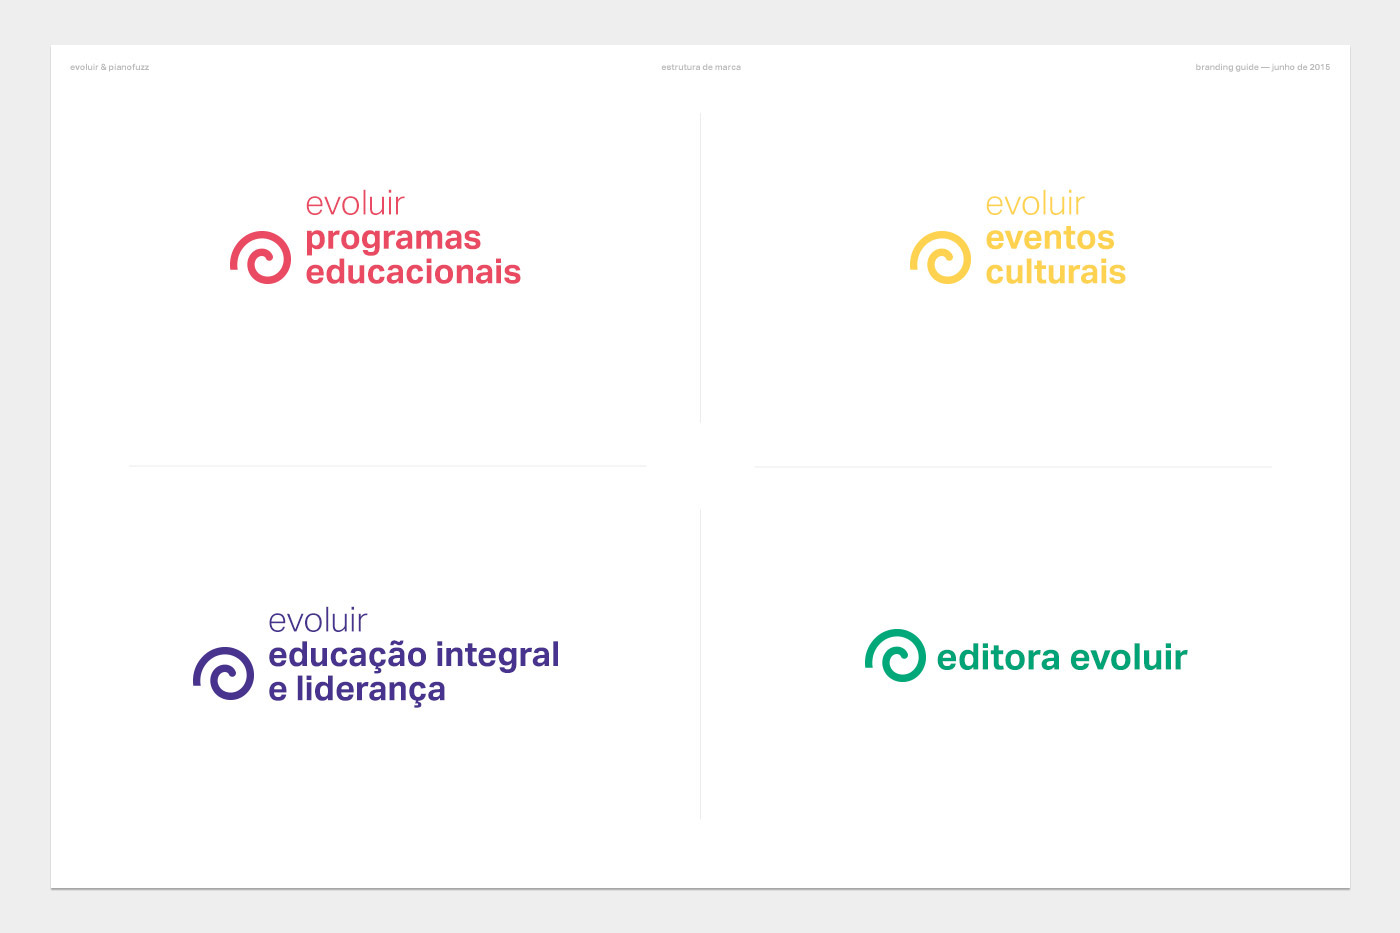 evoluir pianofuzz Iniciativa Social Education culture school redesign brand publisher Editora